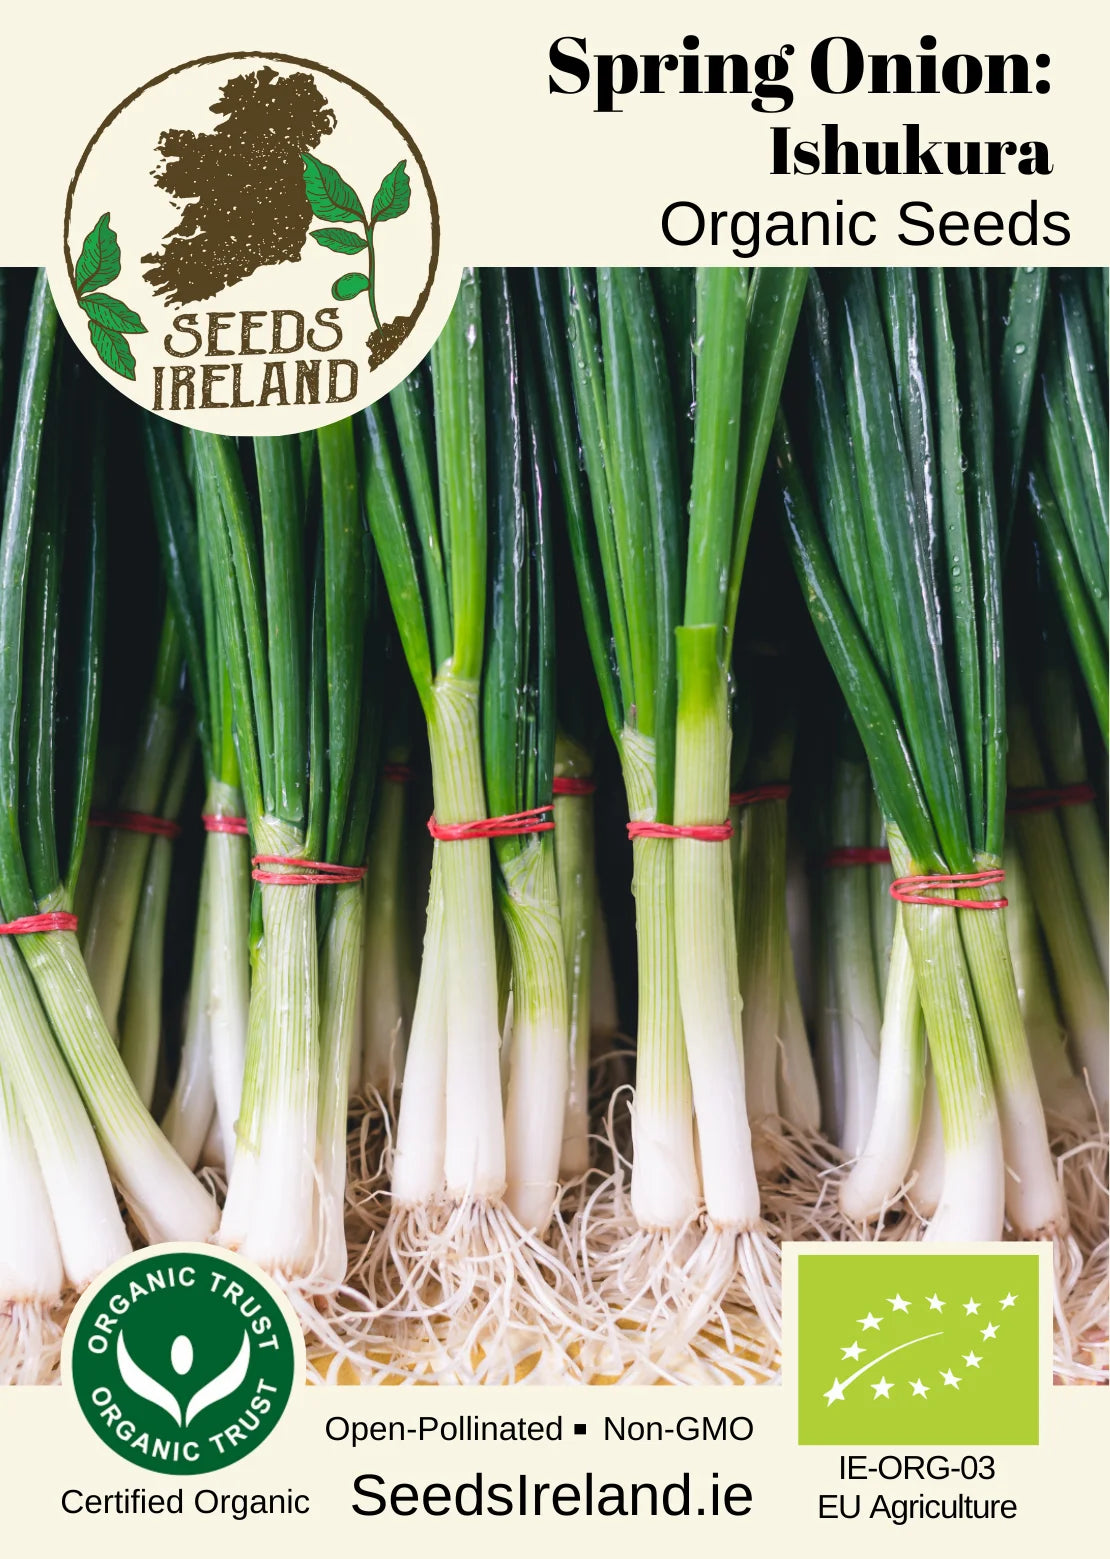 Spring Onion: Ishikura Organic Seed